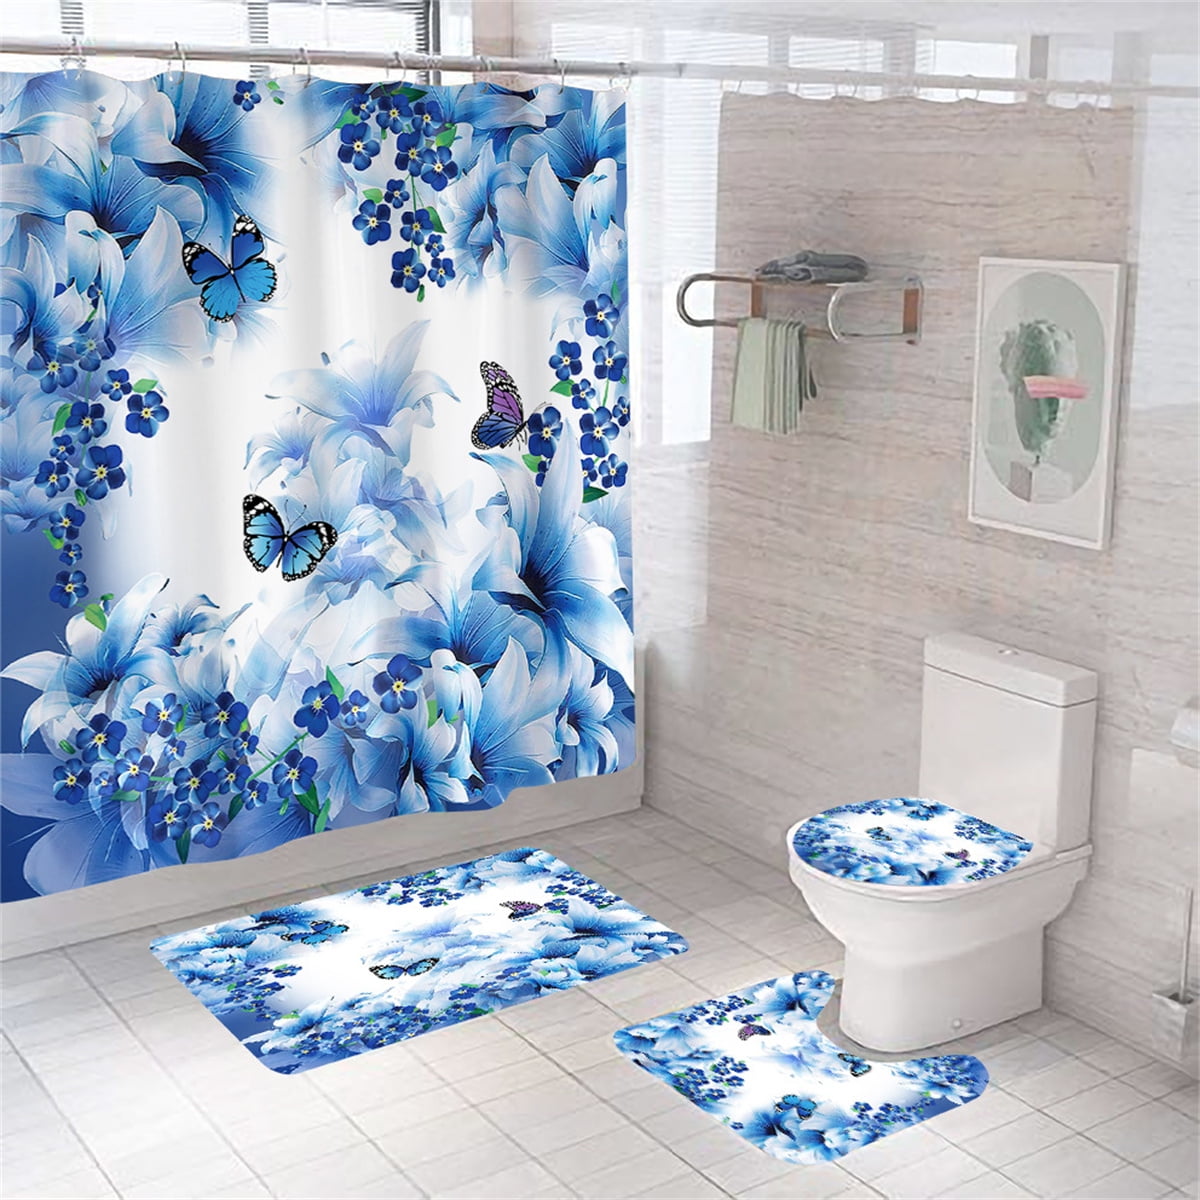 Details about   Iron Man Bathroom Shower Curtain C Hook Floor Mat Non-Slip Toilet Lid Cover 4PCS 